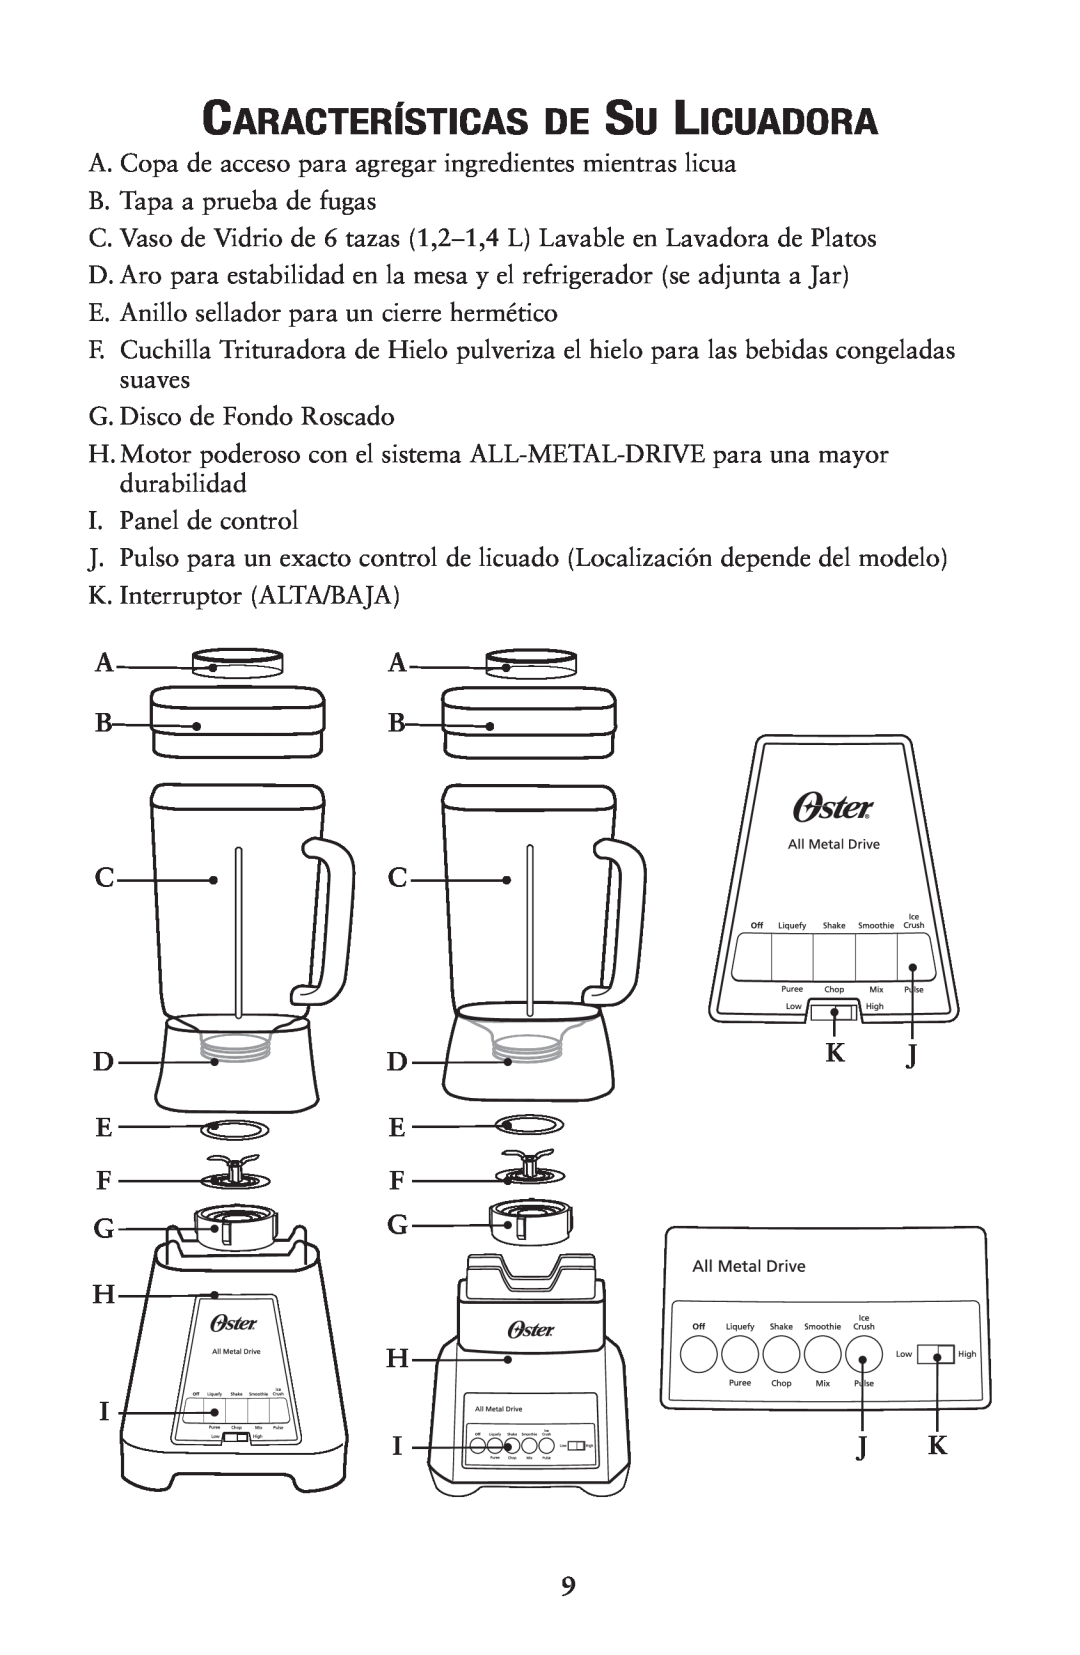 Oster P.N. 133086 user manual Características De Su Licuadora 